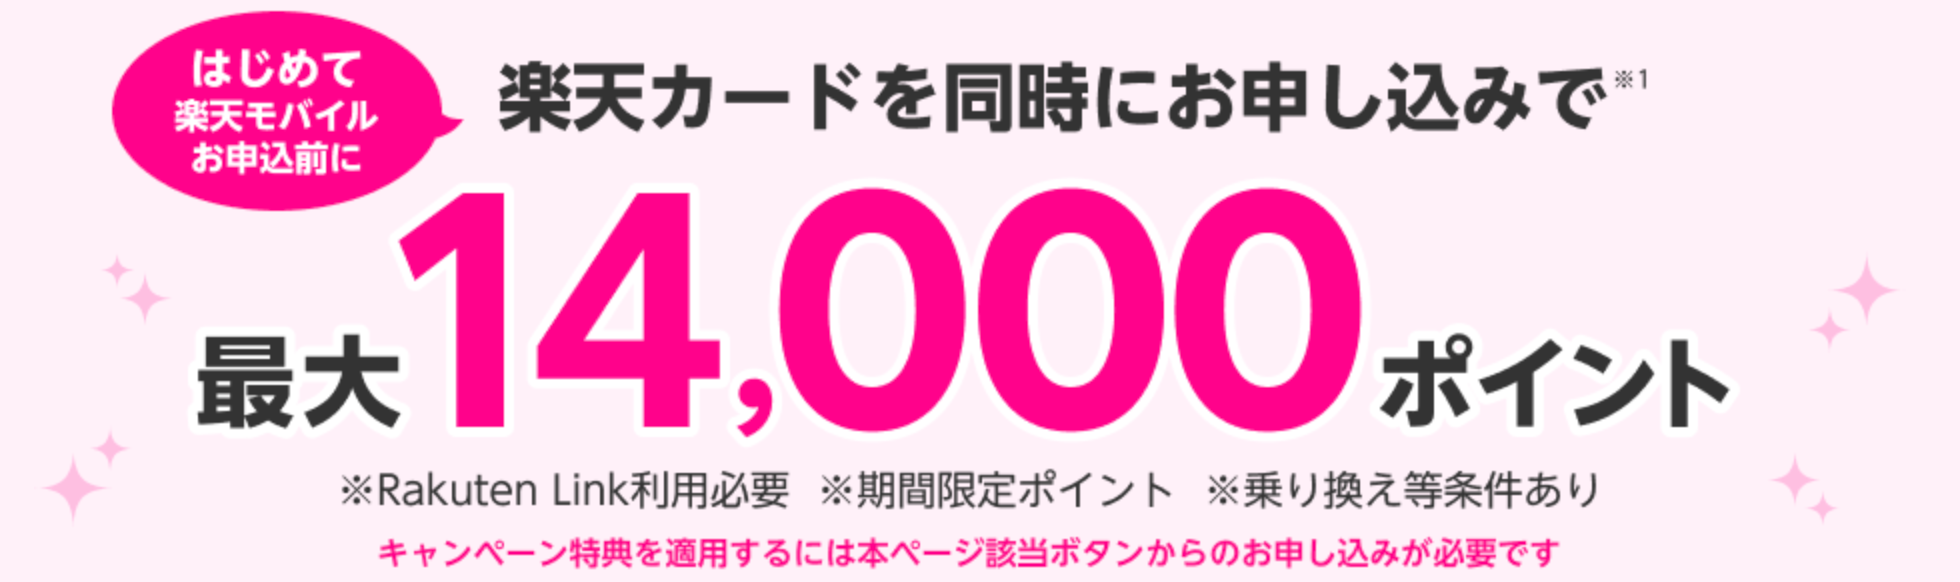 https://network.mobile.rakuten.co.jp/guide/application/card-campaign/